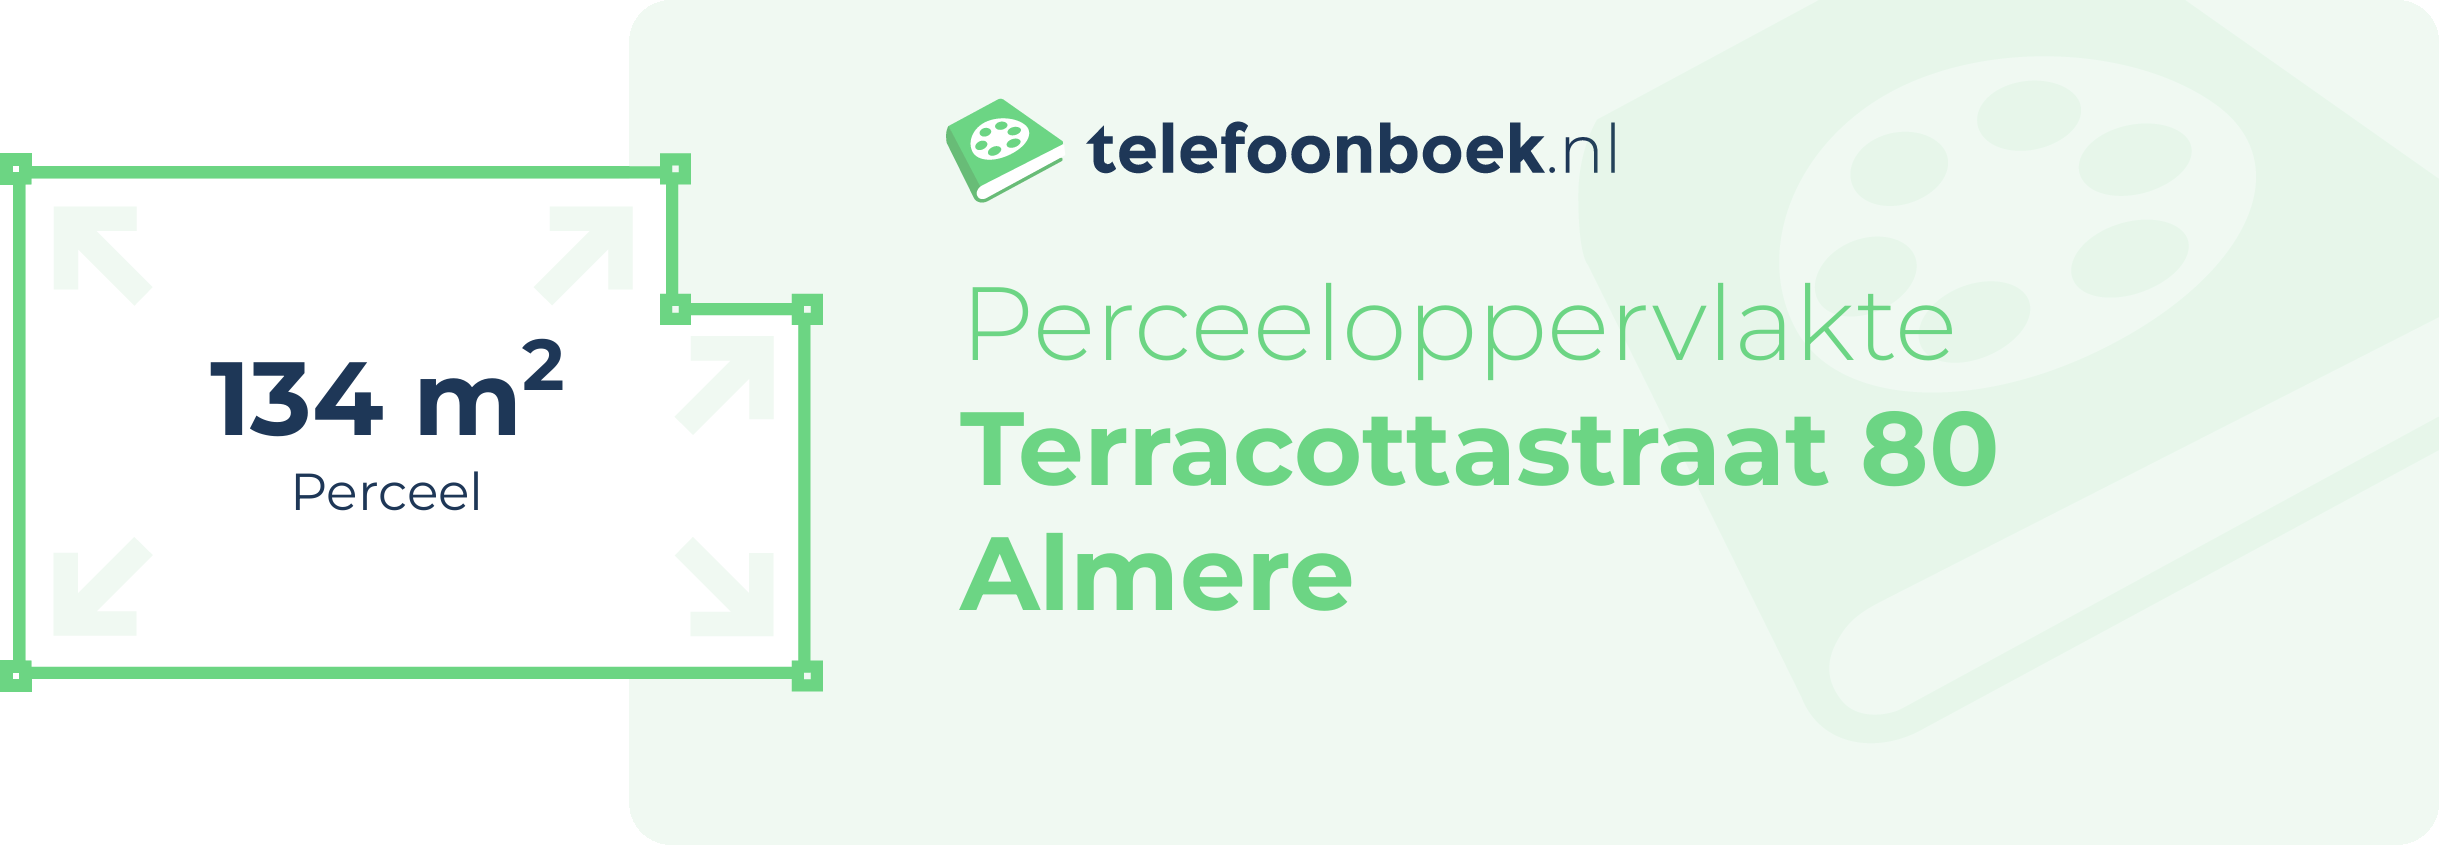 Perceeloppervlakte Terracottastraat 80 Almere